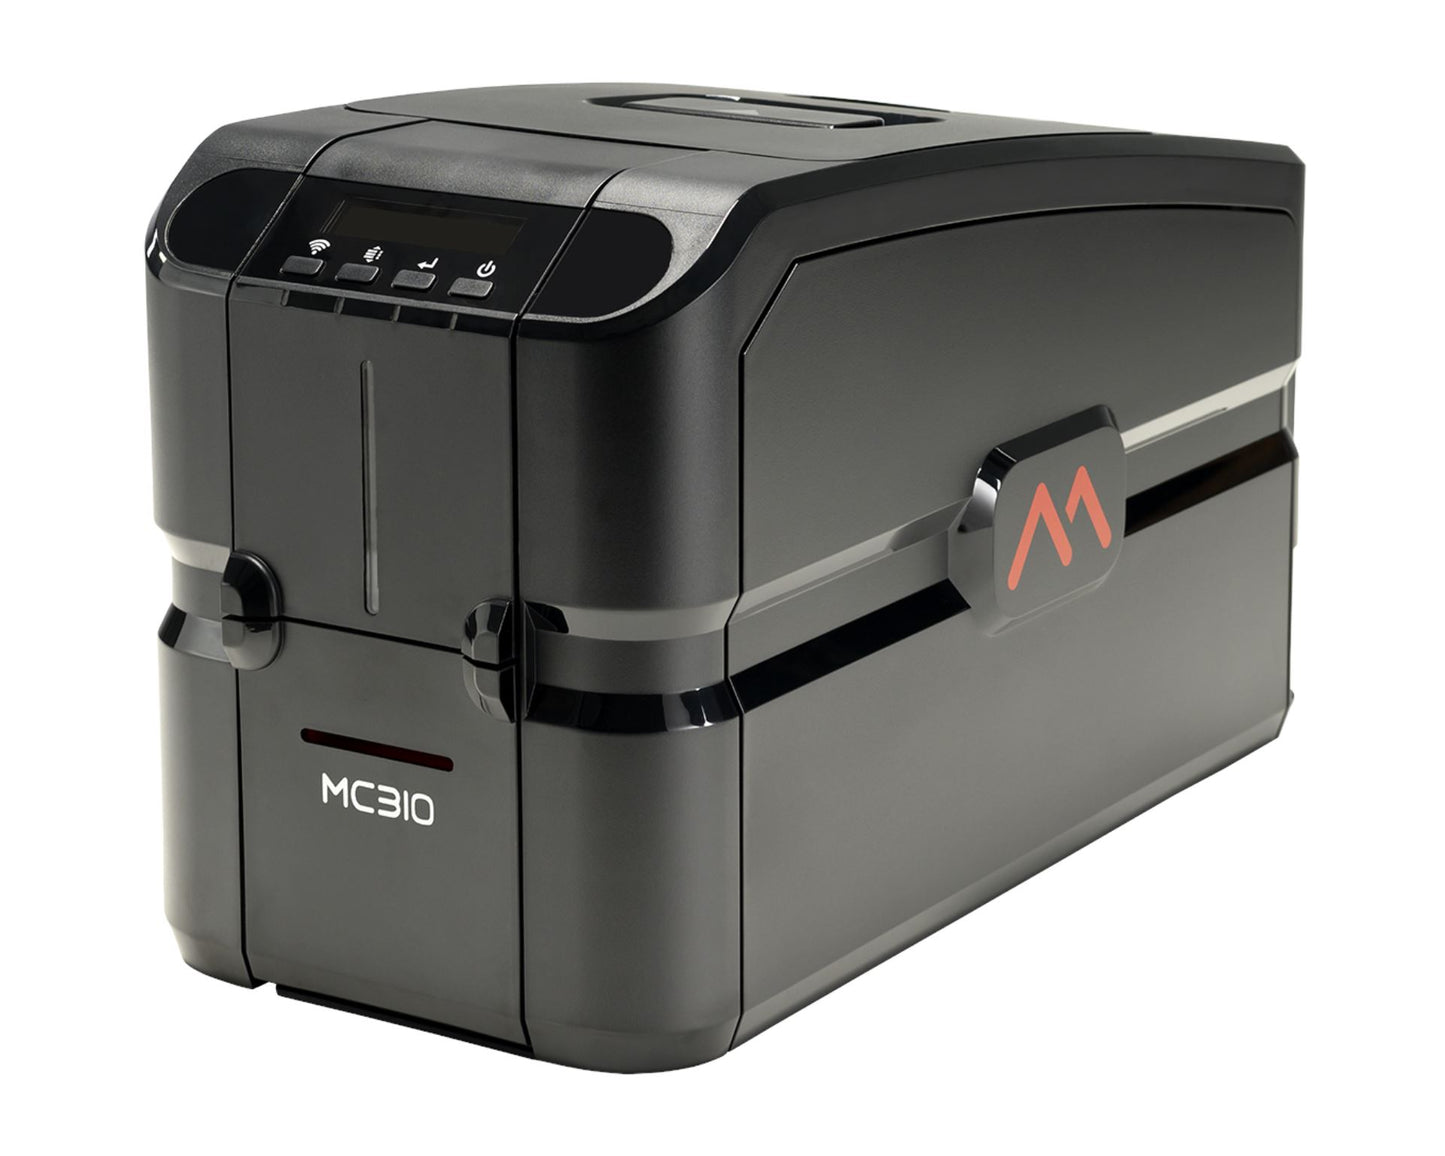 Matica MC310 Direct-to-Card Printer